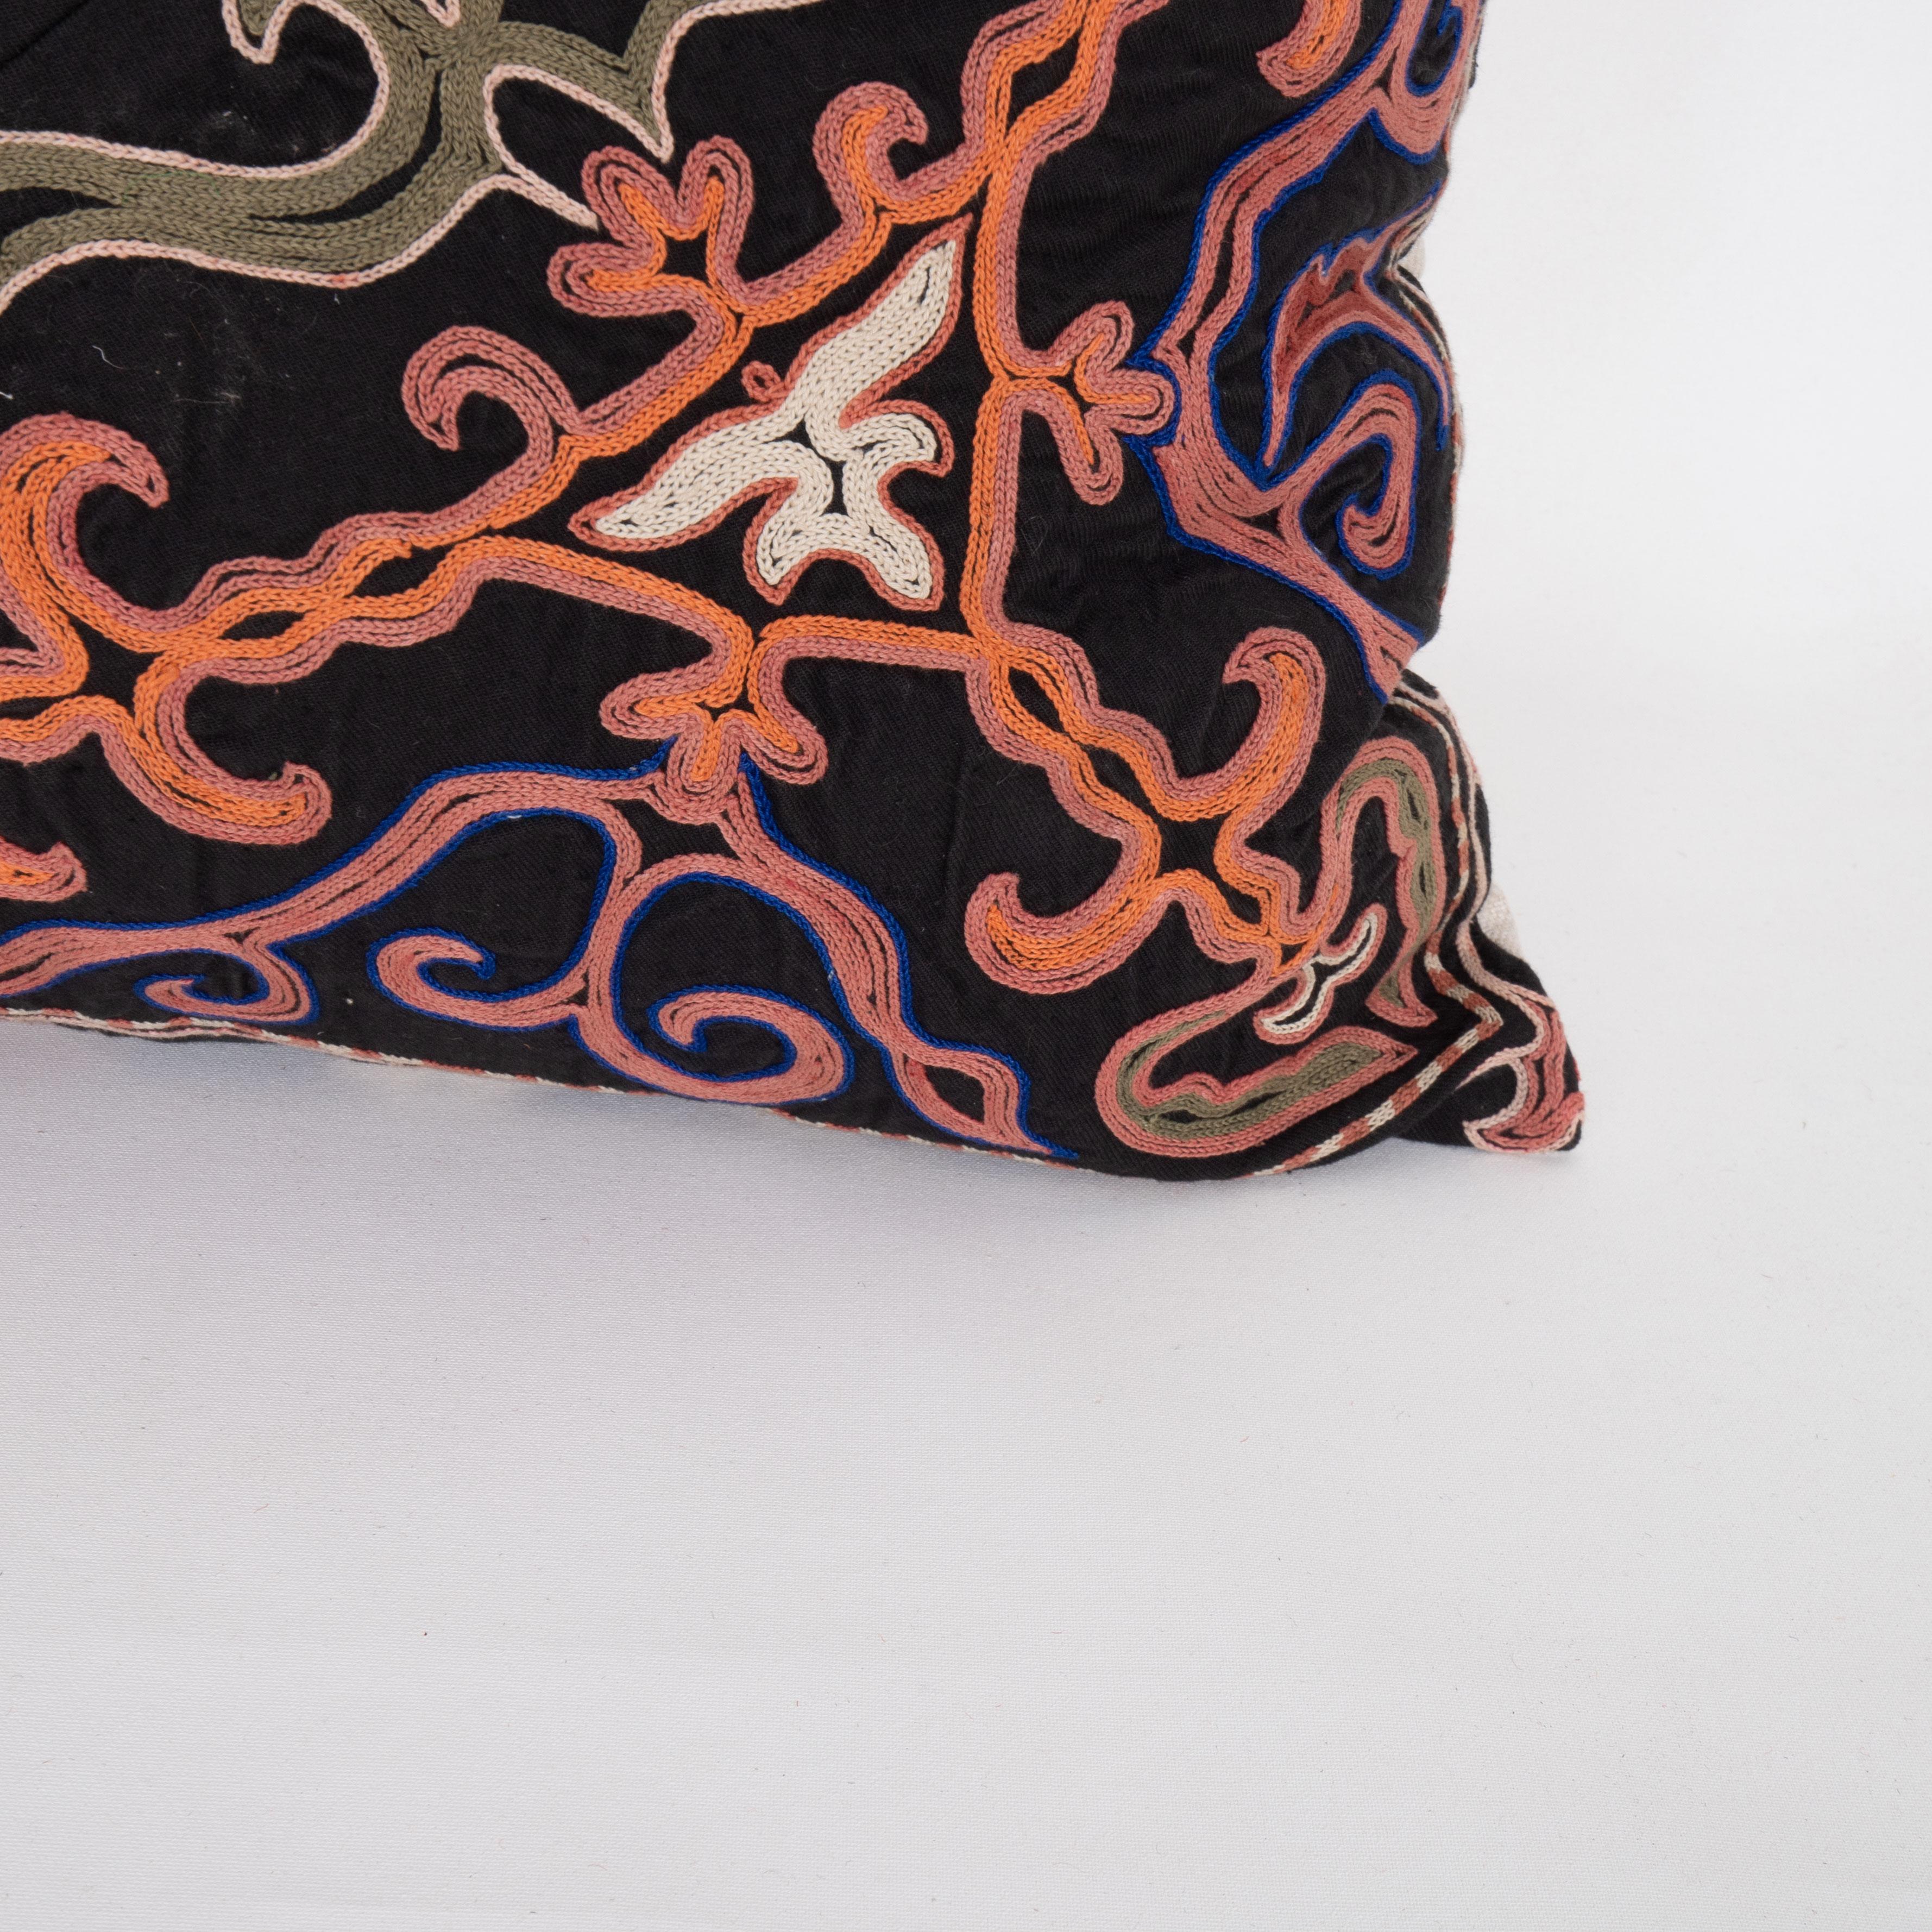 Kazakhstani Pillowcase made from a mid 20th. C. Kazakh / Kyrgyz Embroidery